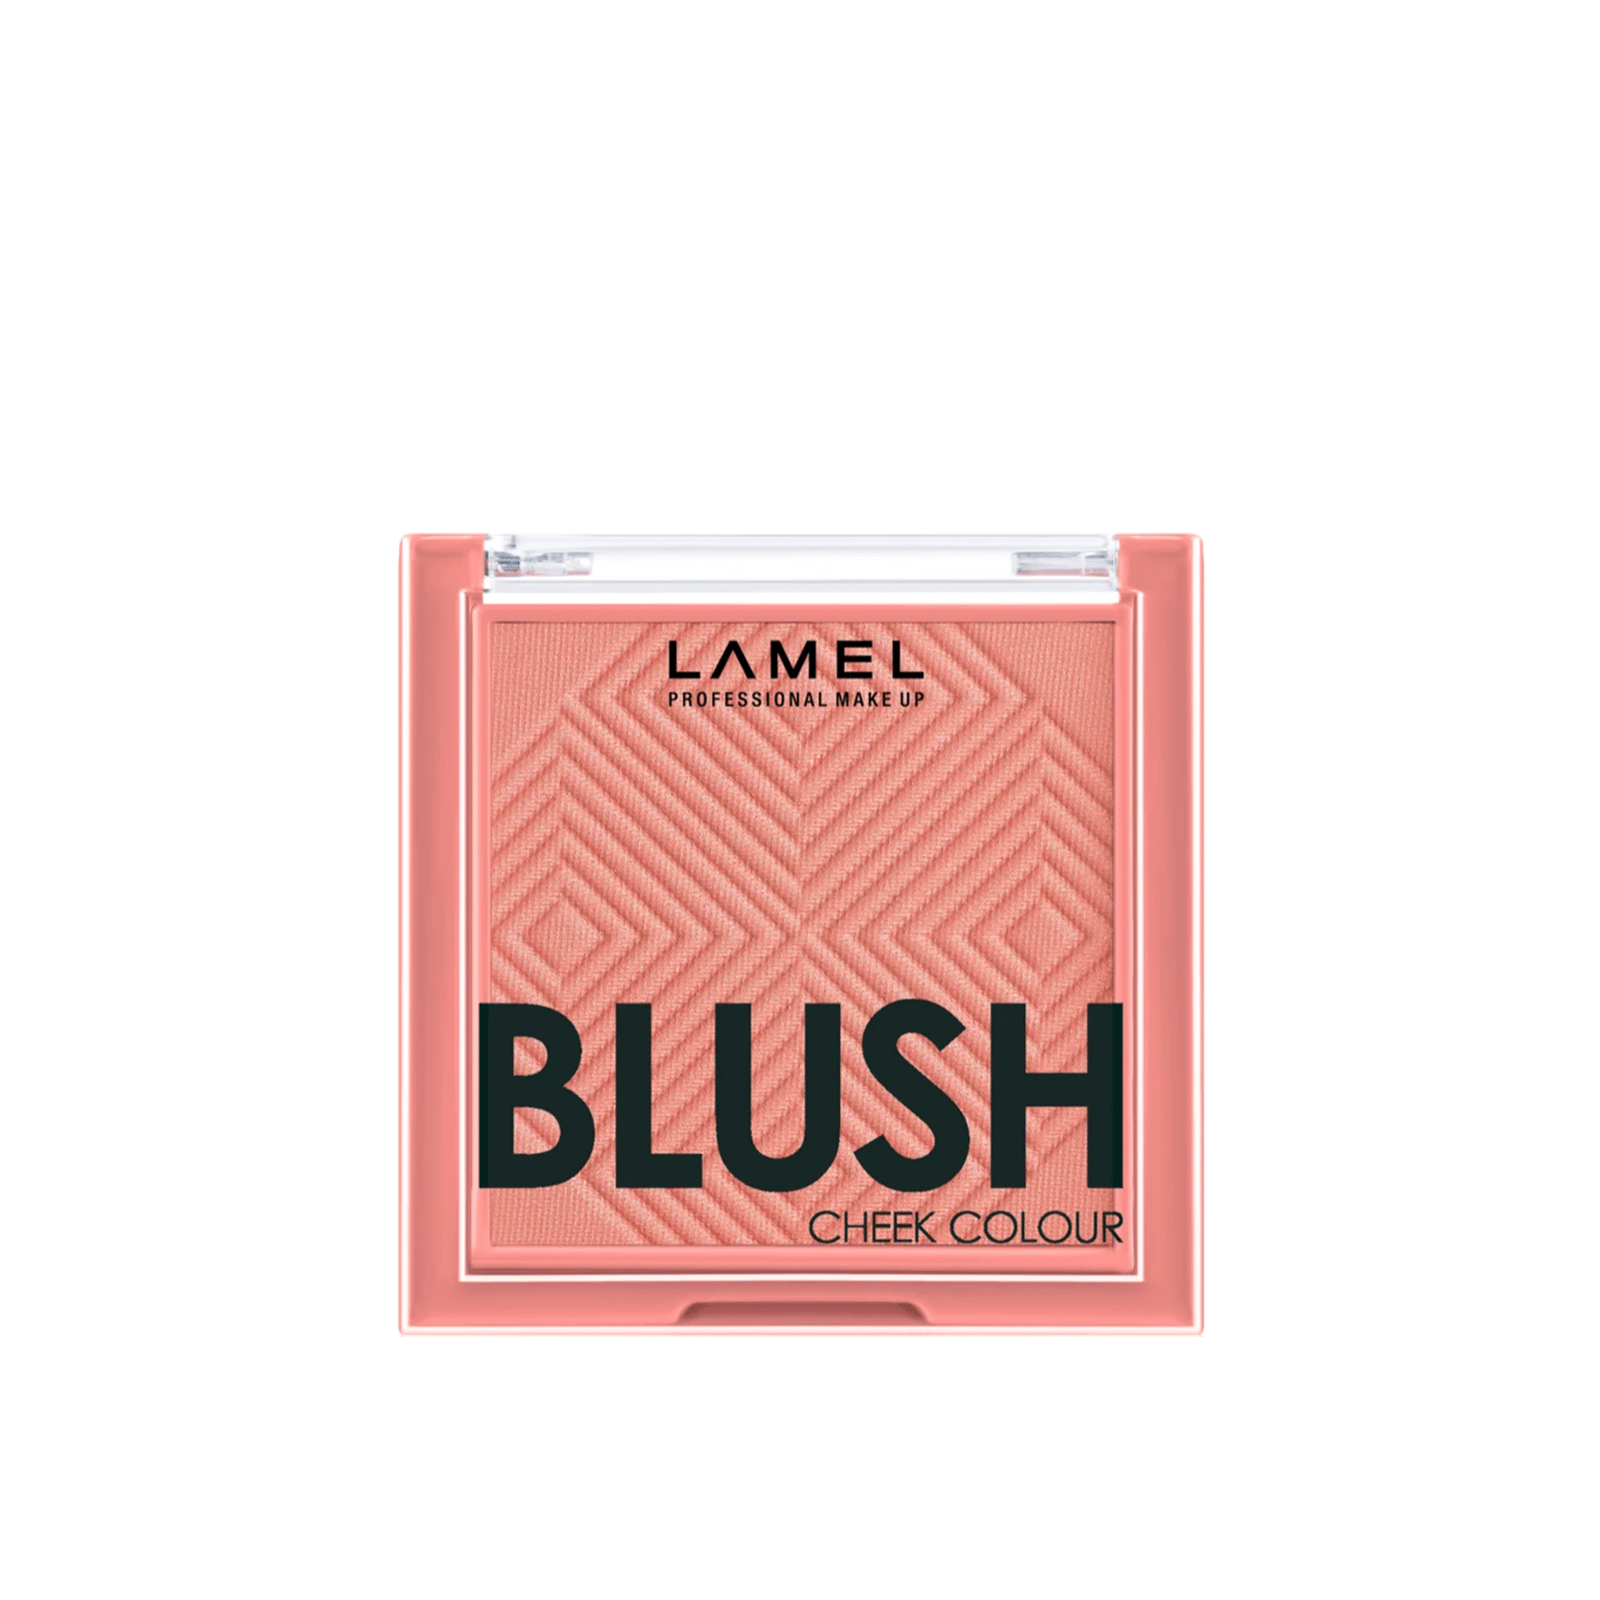 Lamel Blush Cheek Colour 403 3.8g